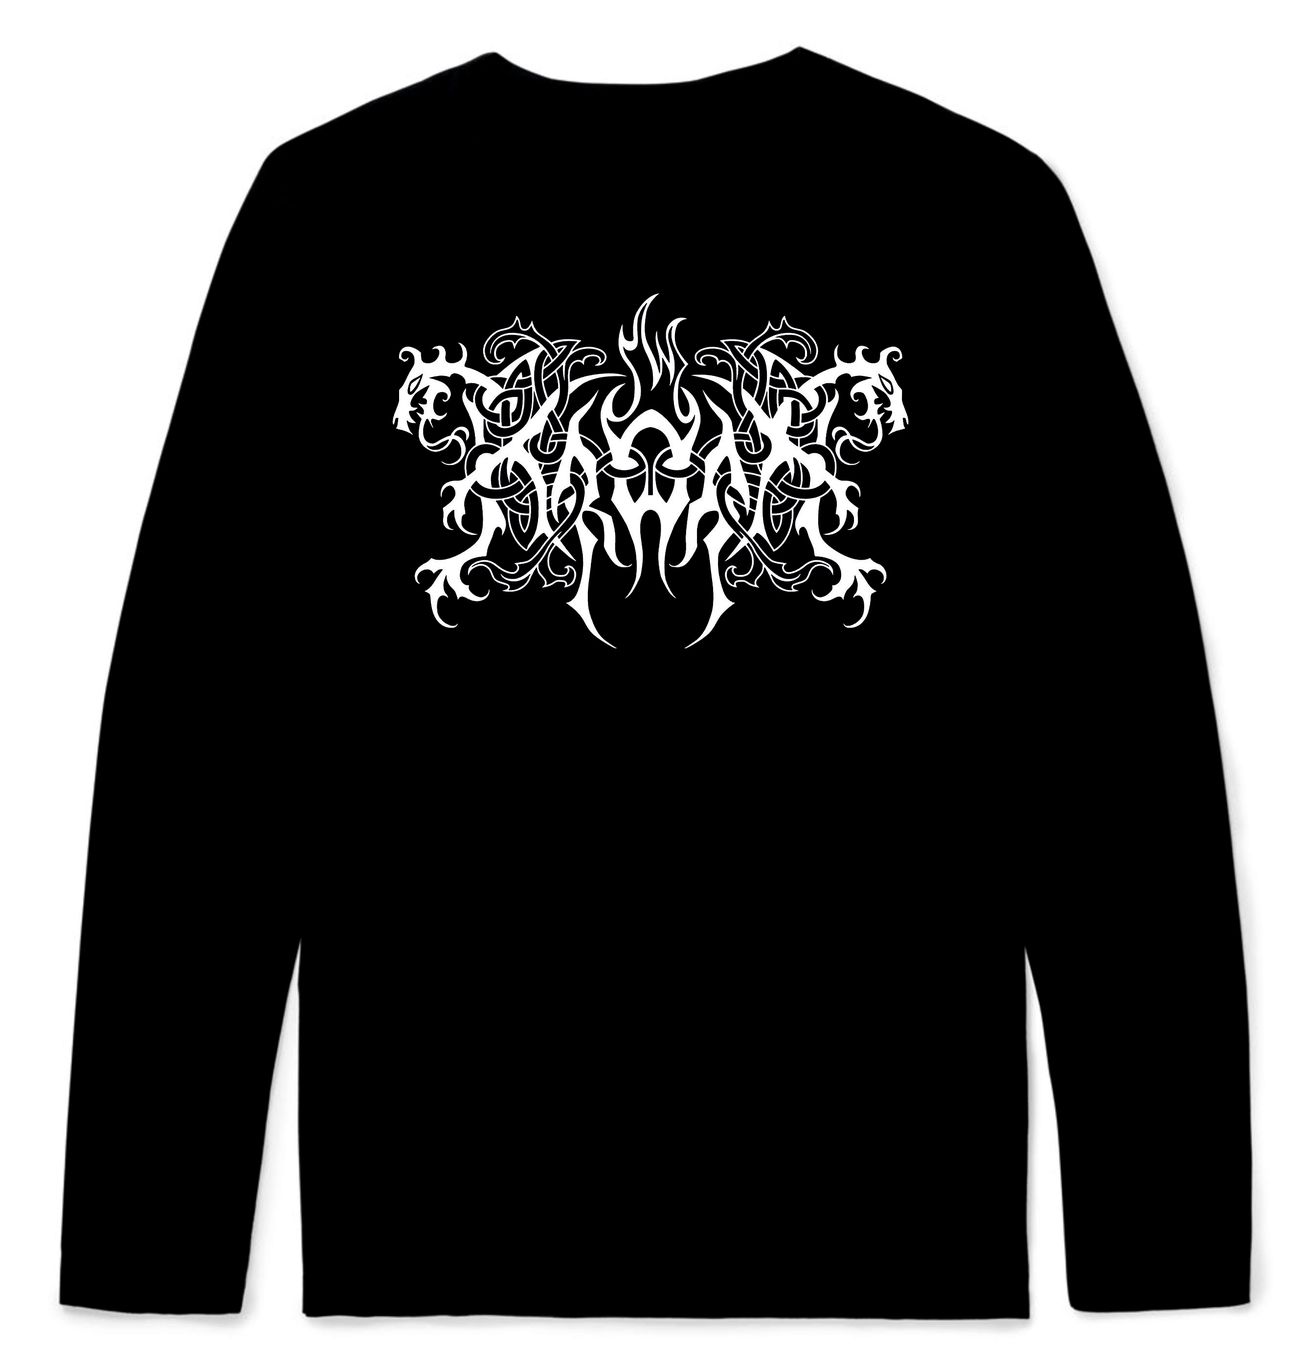 Kroda Longsleeve T-Shirt – Metal & Rock T-shirts and Accessories